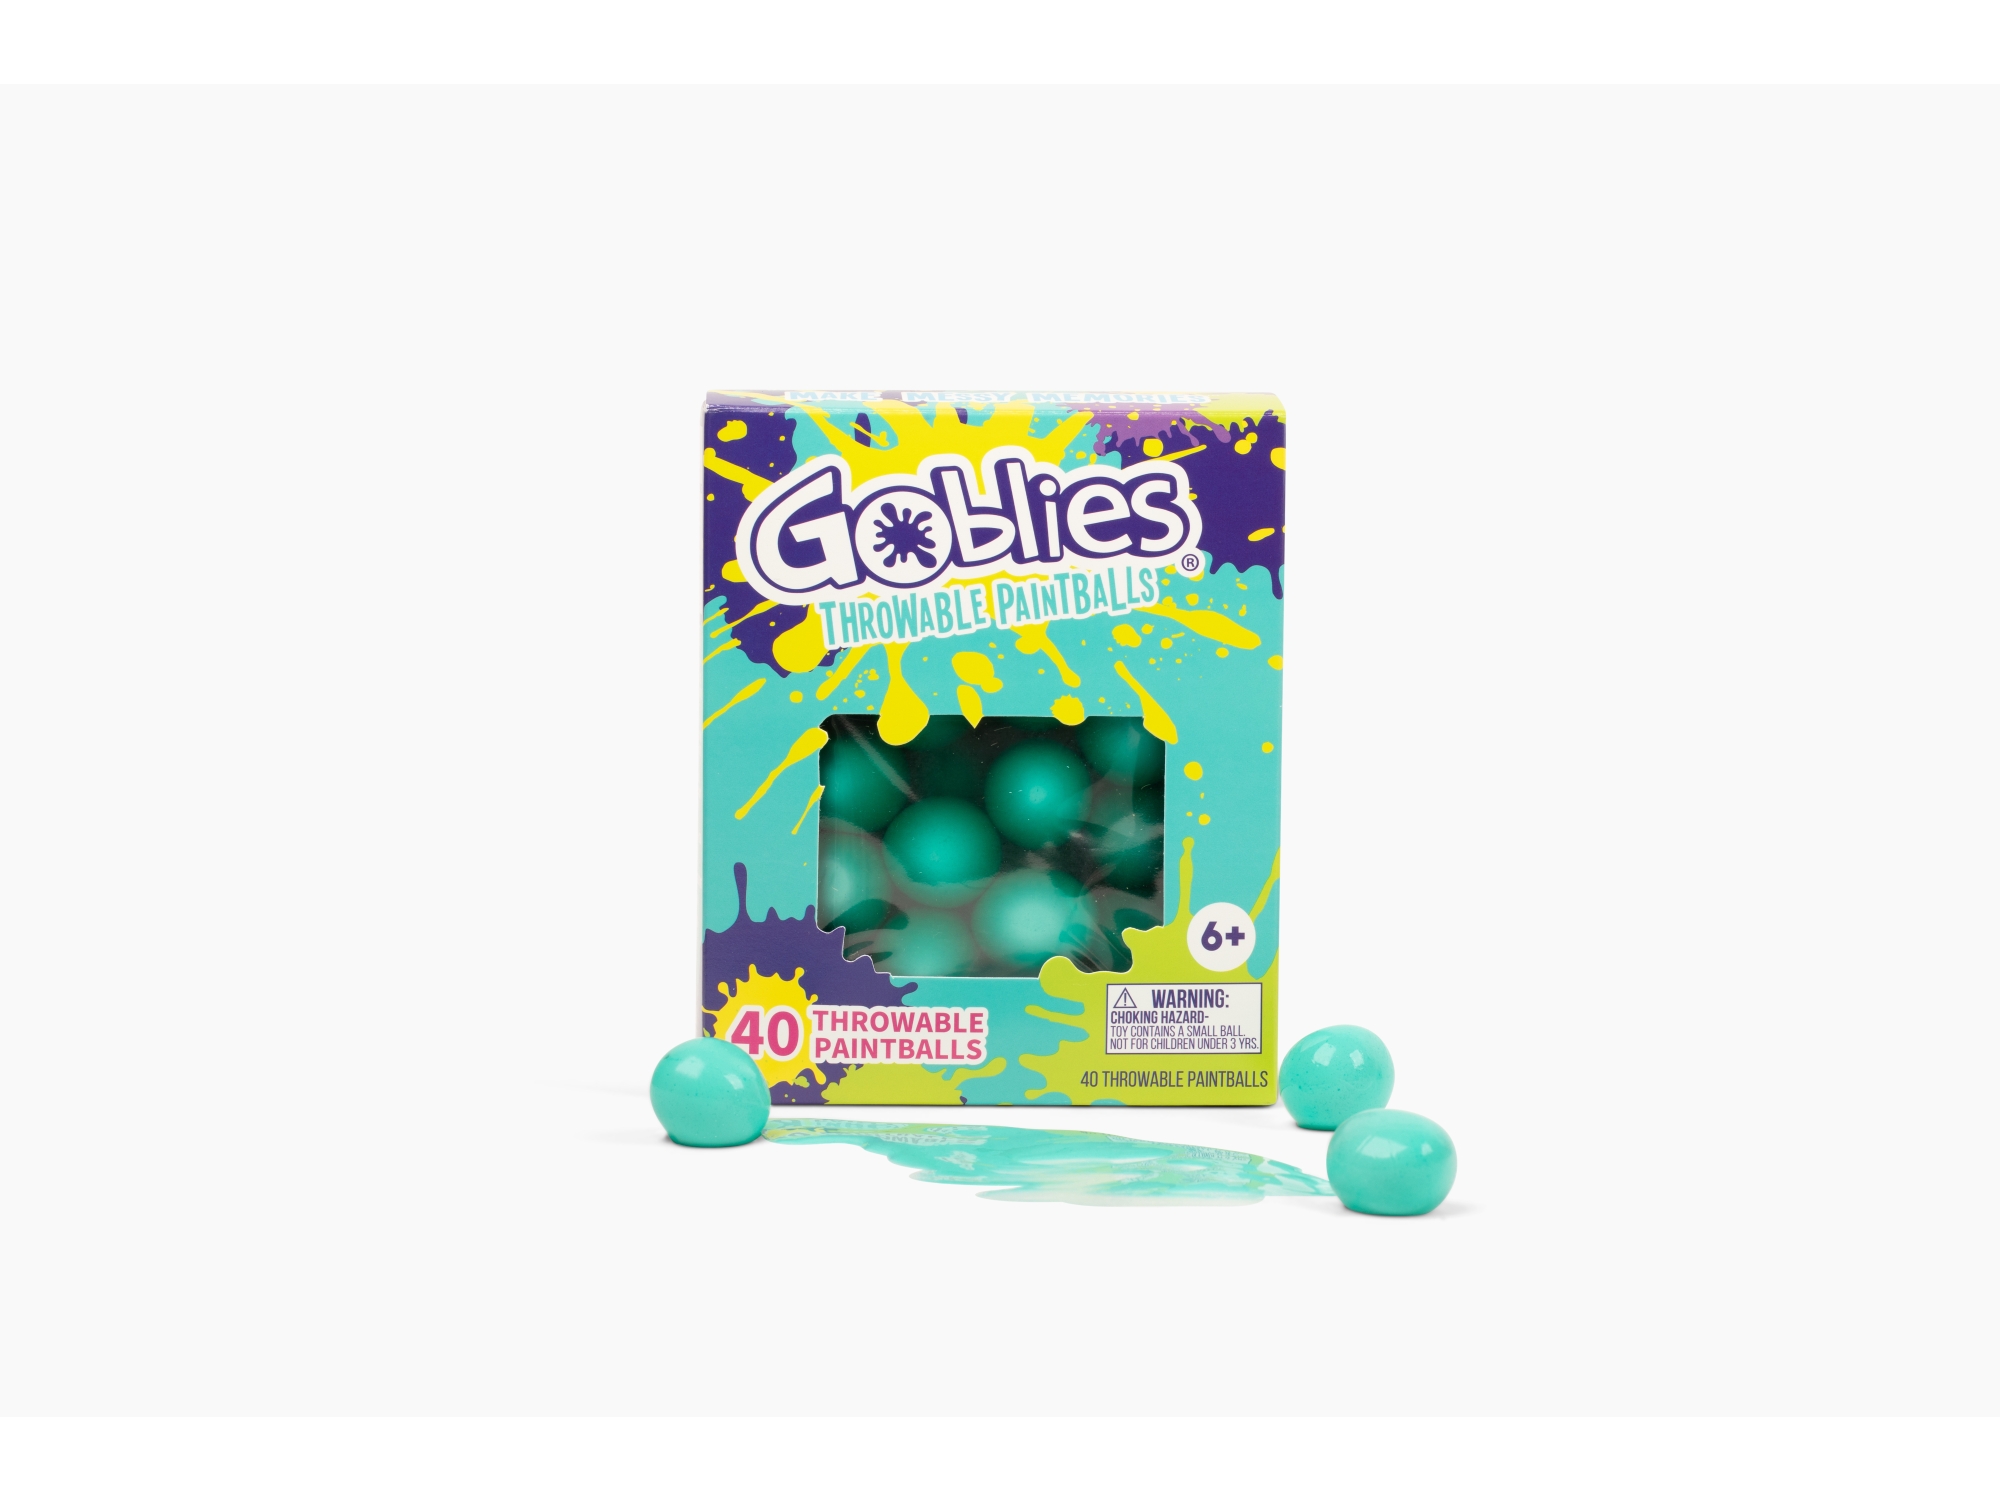 Gobiles Goblies Throwable Paintballs 40ct, Teal, Aqua